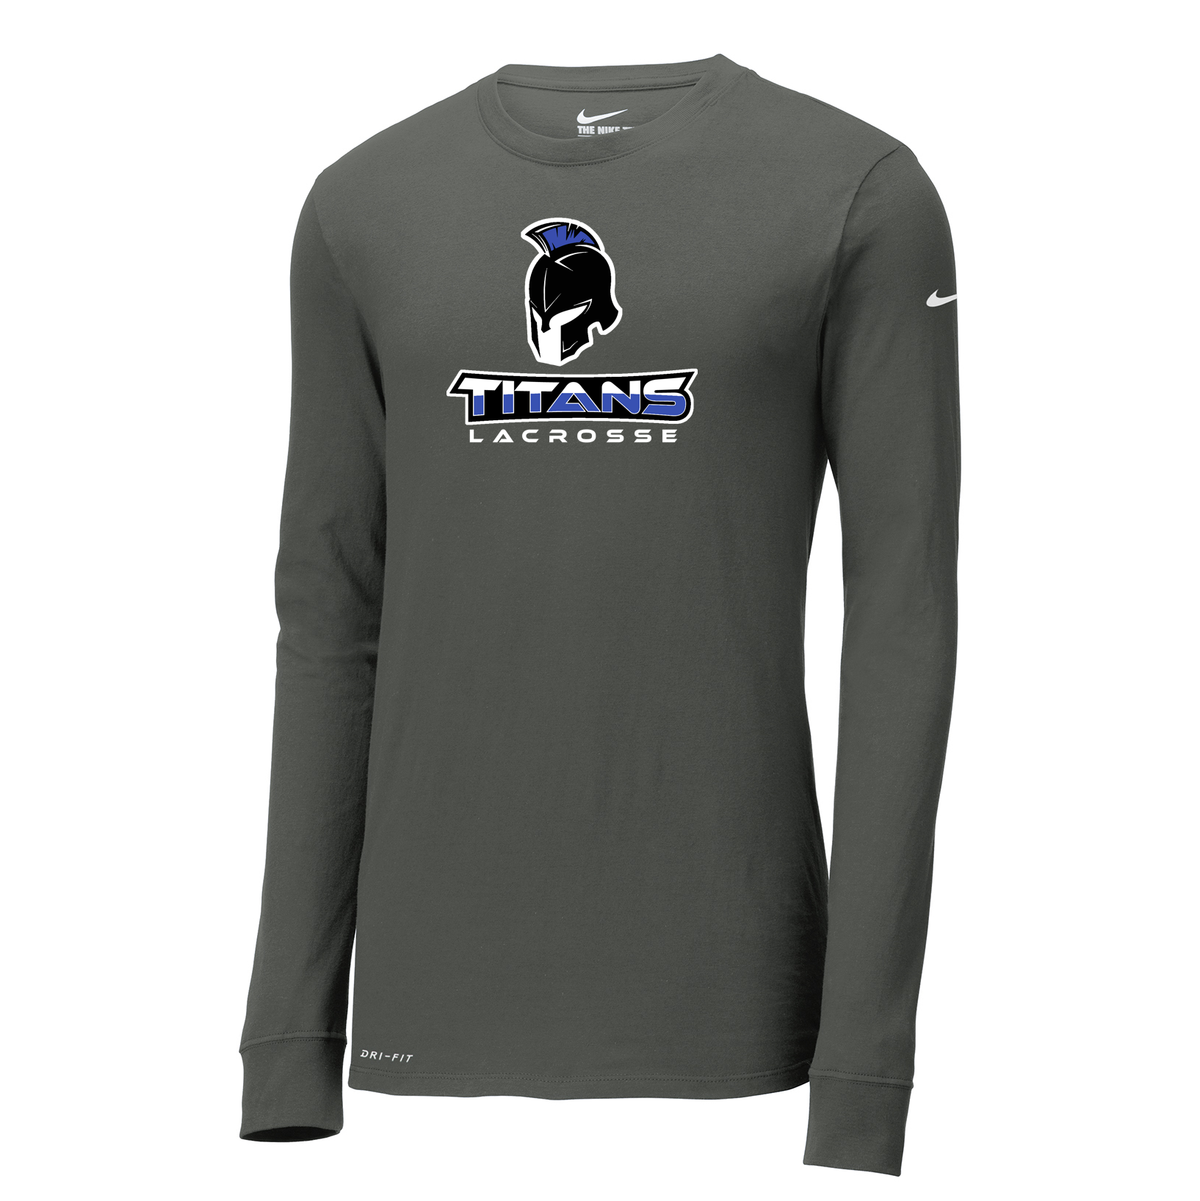 Southwest Titans Lacrosse Nike Dri-FIT Long Sleeve Tee